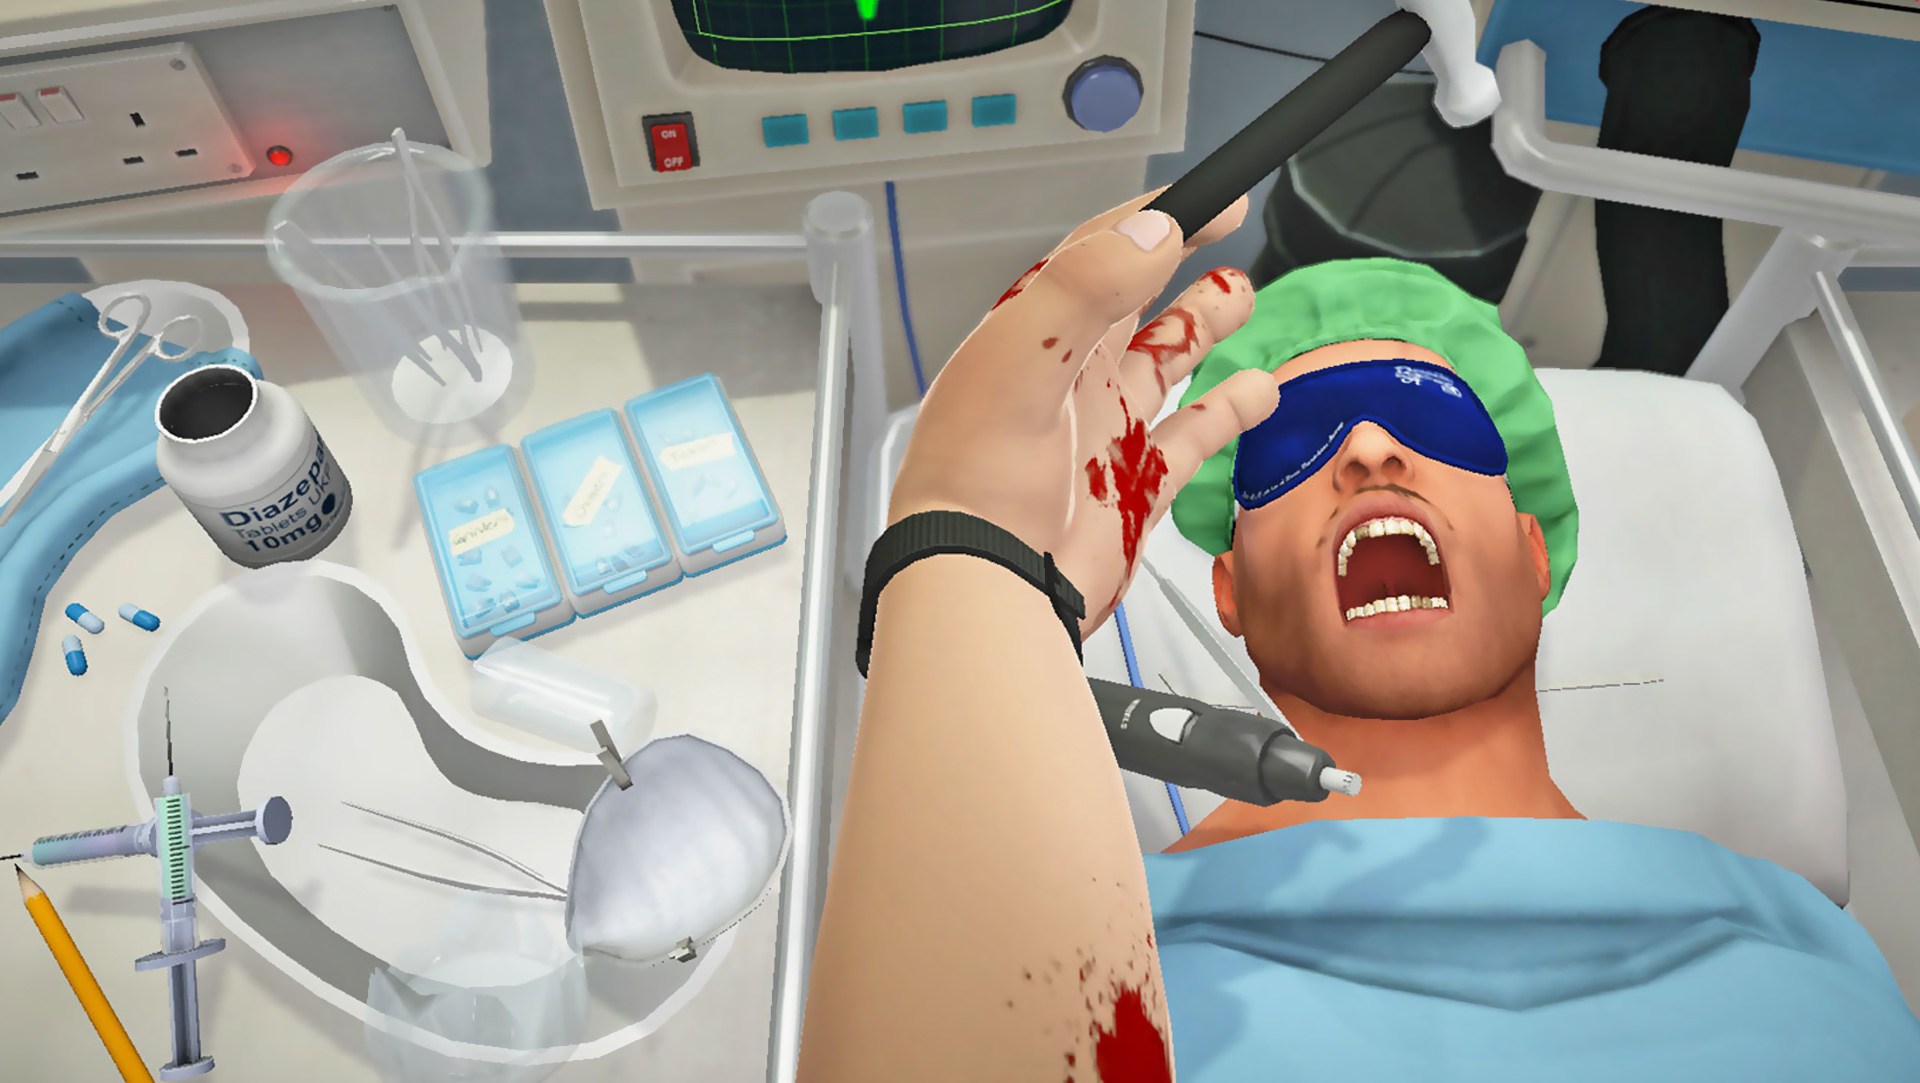 Surgeon simulator mac download full version windows 10